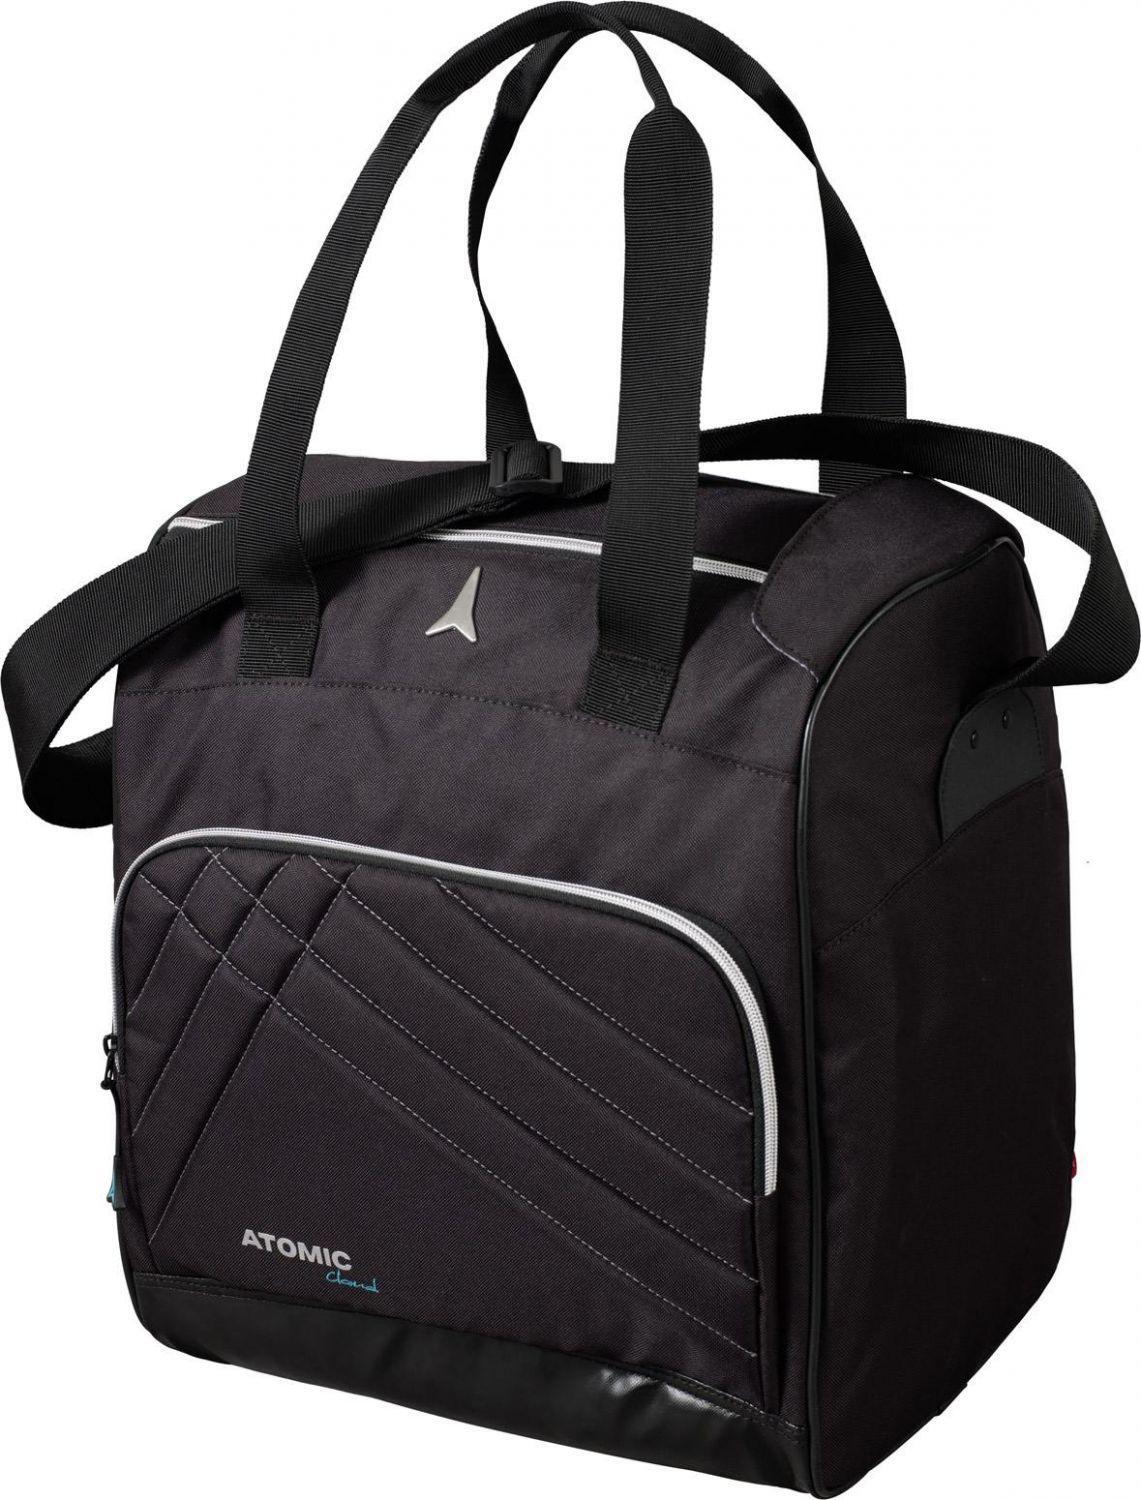 Atomic boot & accessory skischuhtasche (farbe: black)